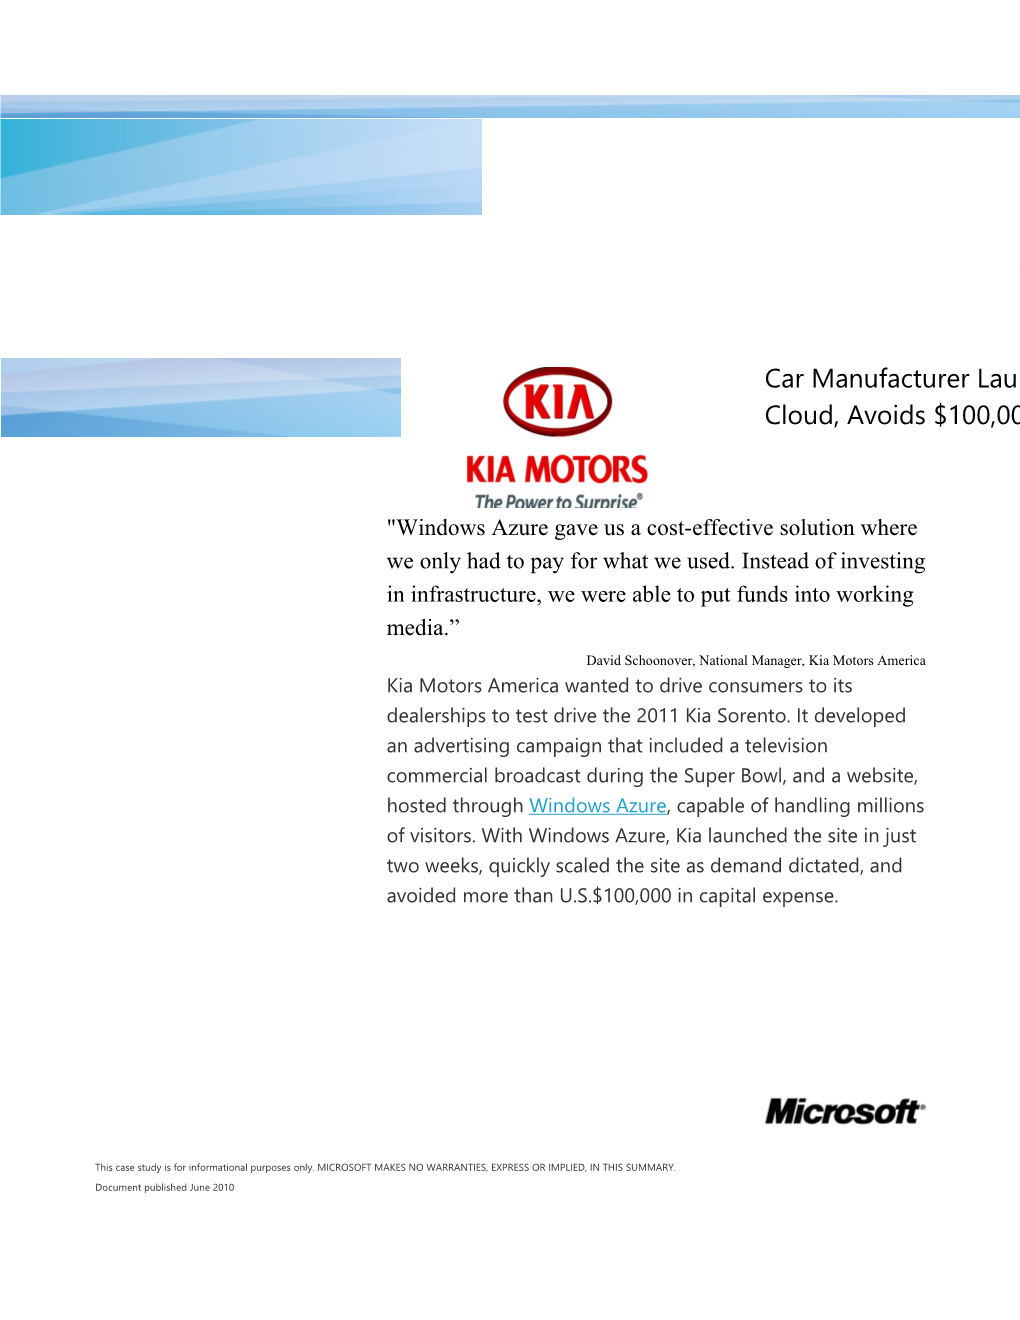 David Schoonover, National Manager, Kia Motors America